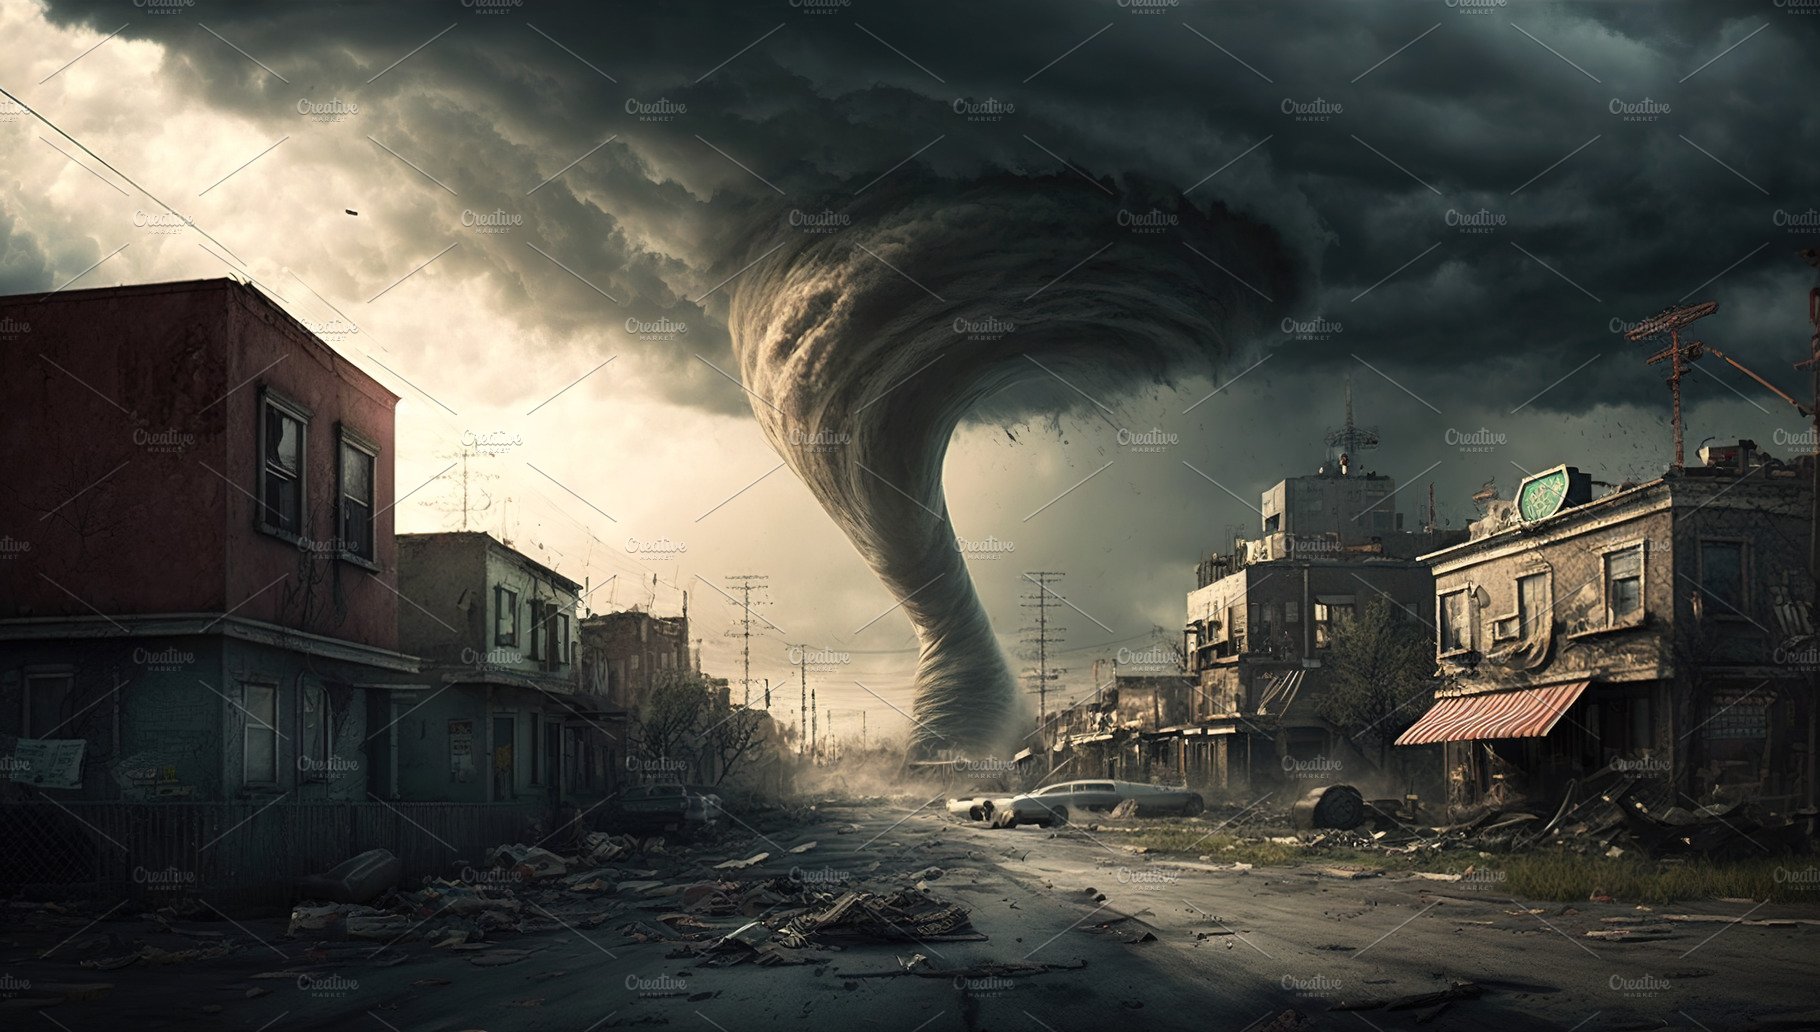 Tornado storm destroying houses cover image.